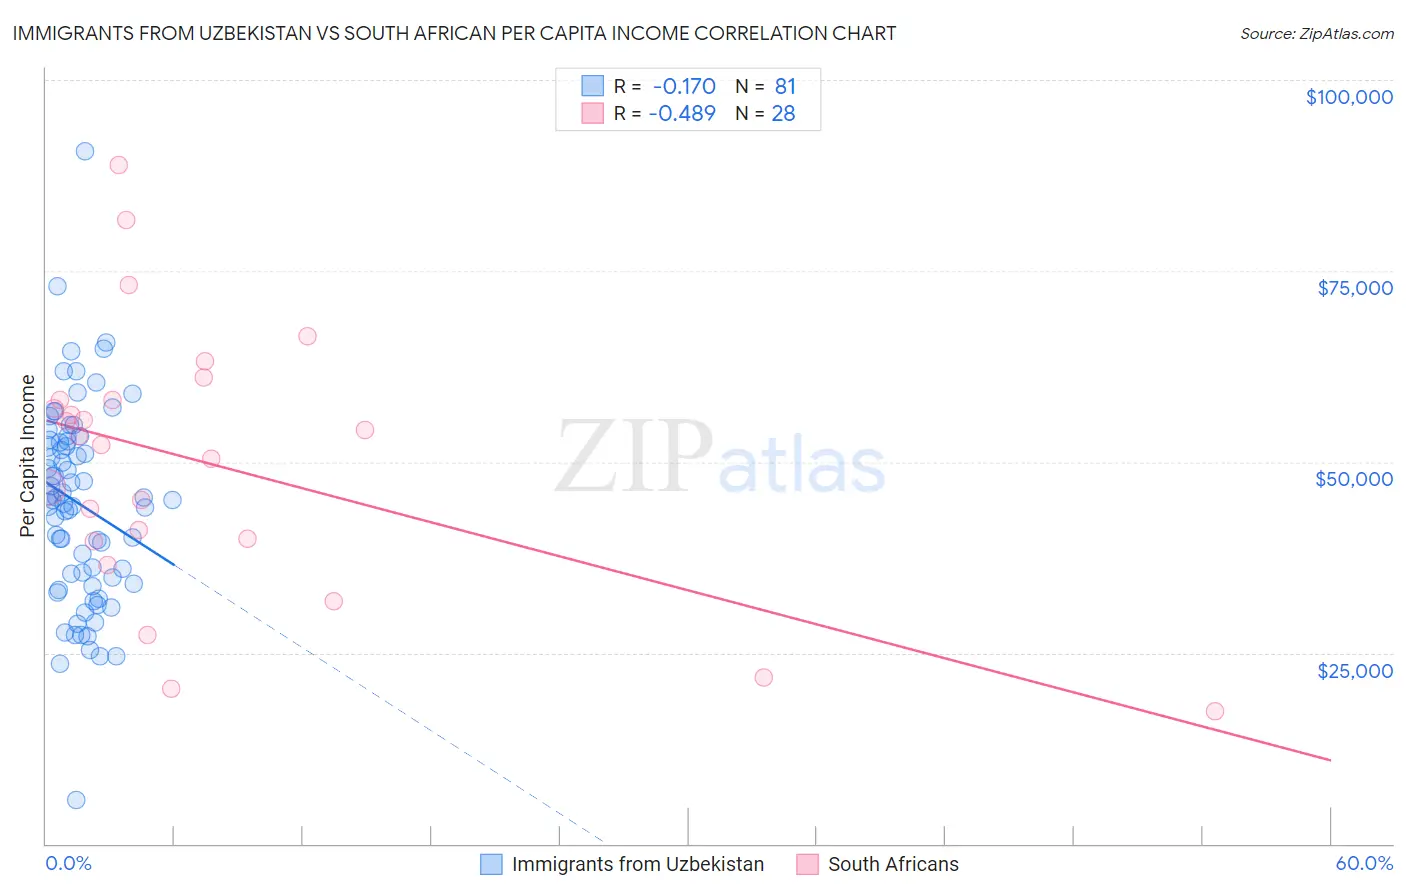 Immigrants from Uzbekistan vs South African Per Capita Income